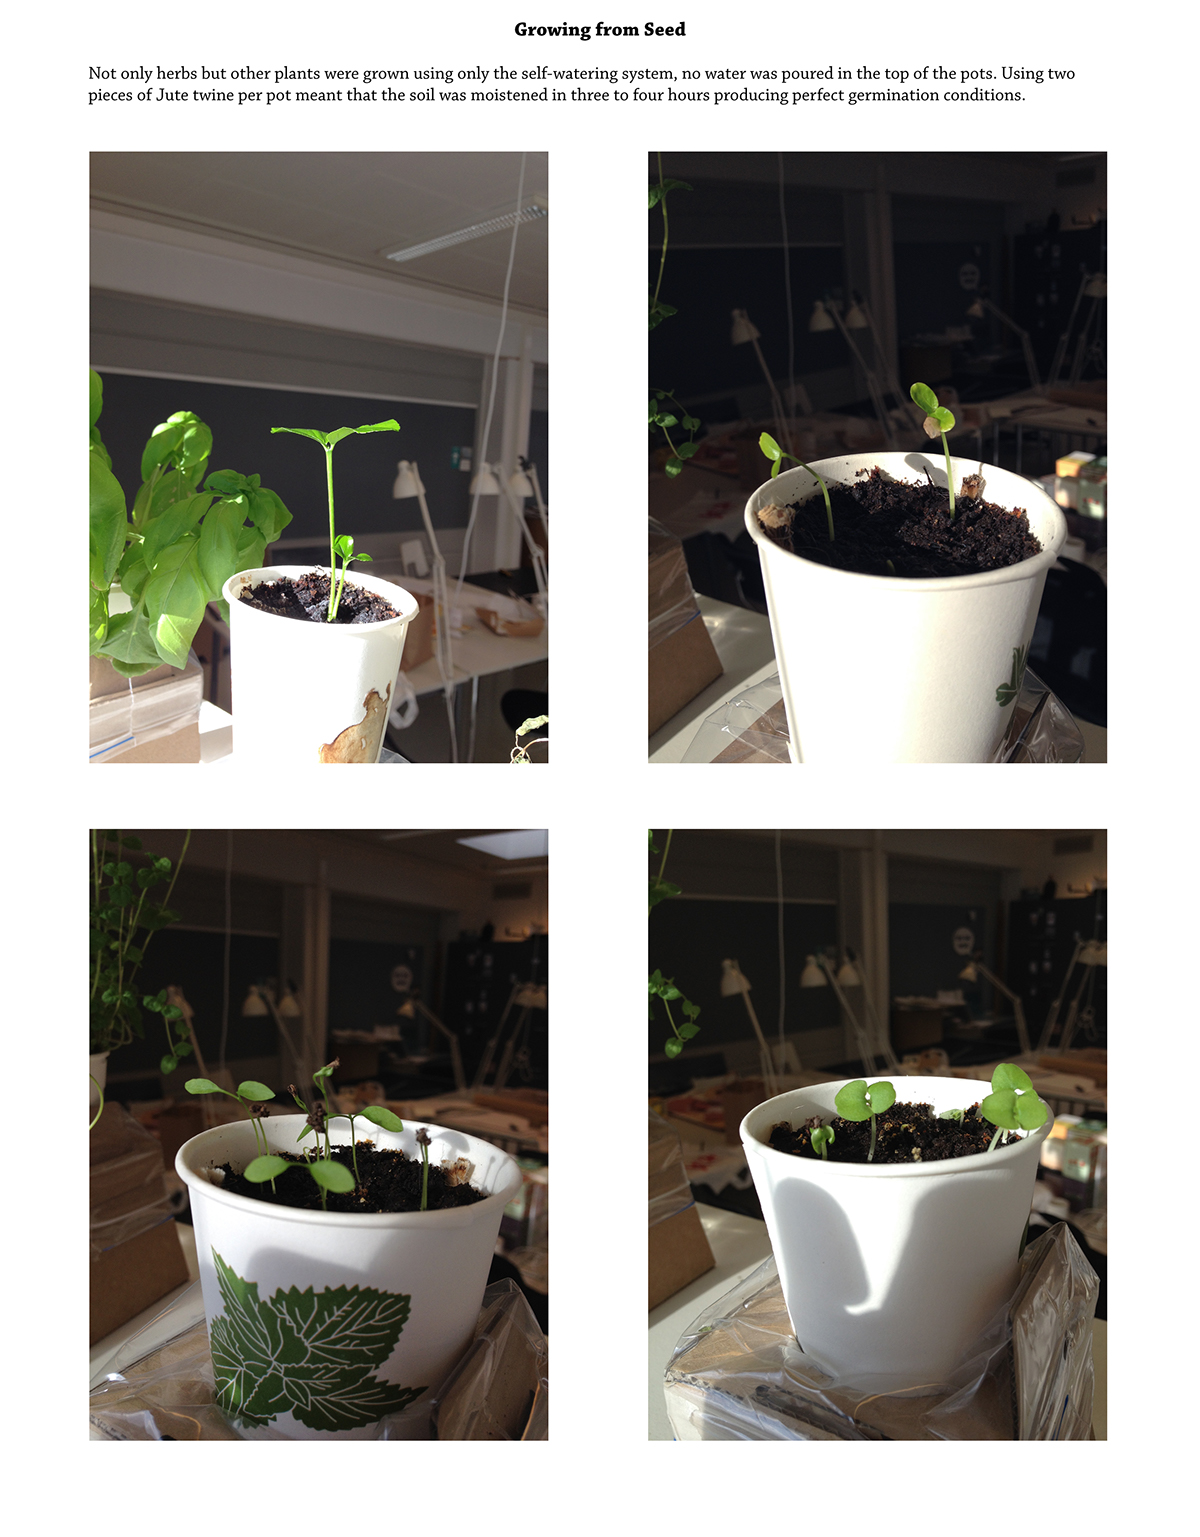 starpack Starpack 2015 herbs grow kit tetra pak Tetra rex Health self-watering